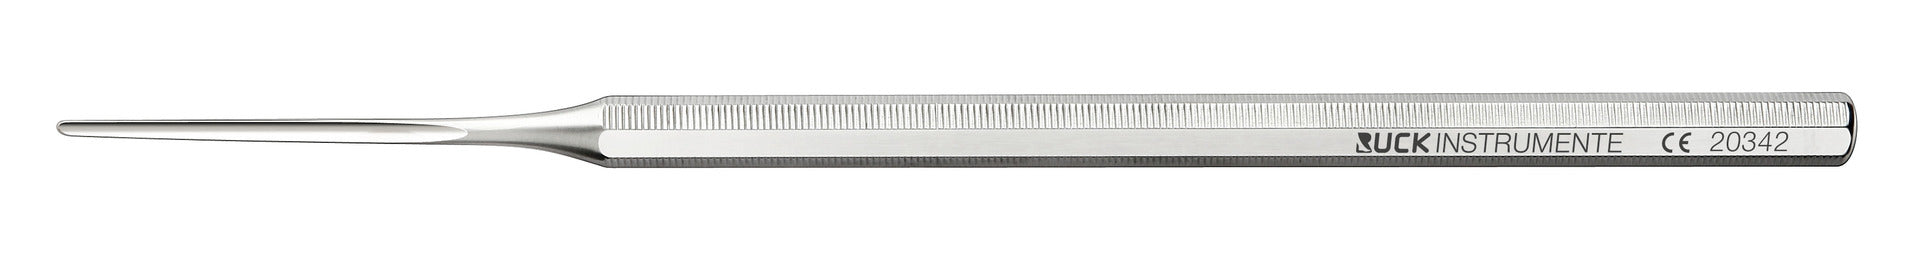 Burin - Longueur : 13,5 cm - Tranchant : 1,3 mm - Ruck